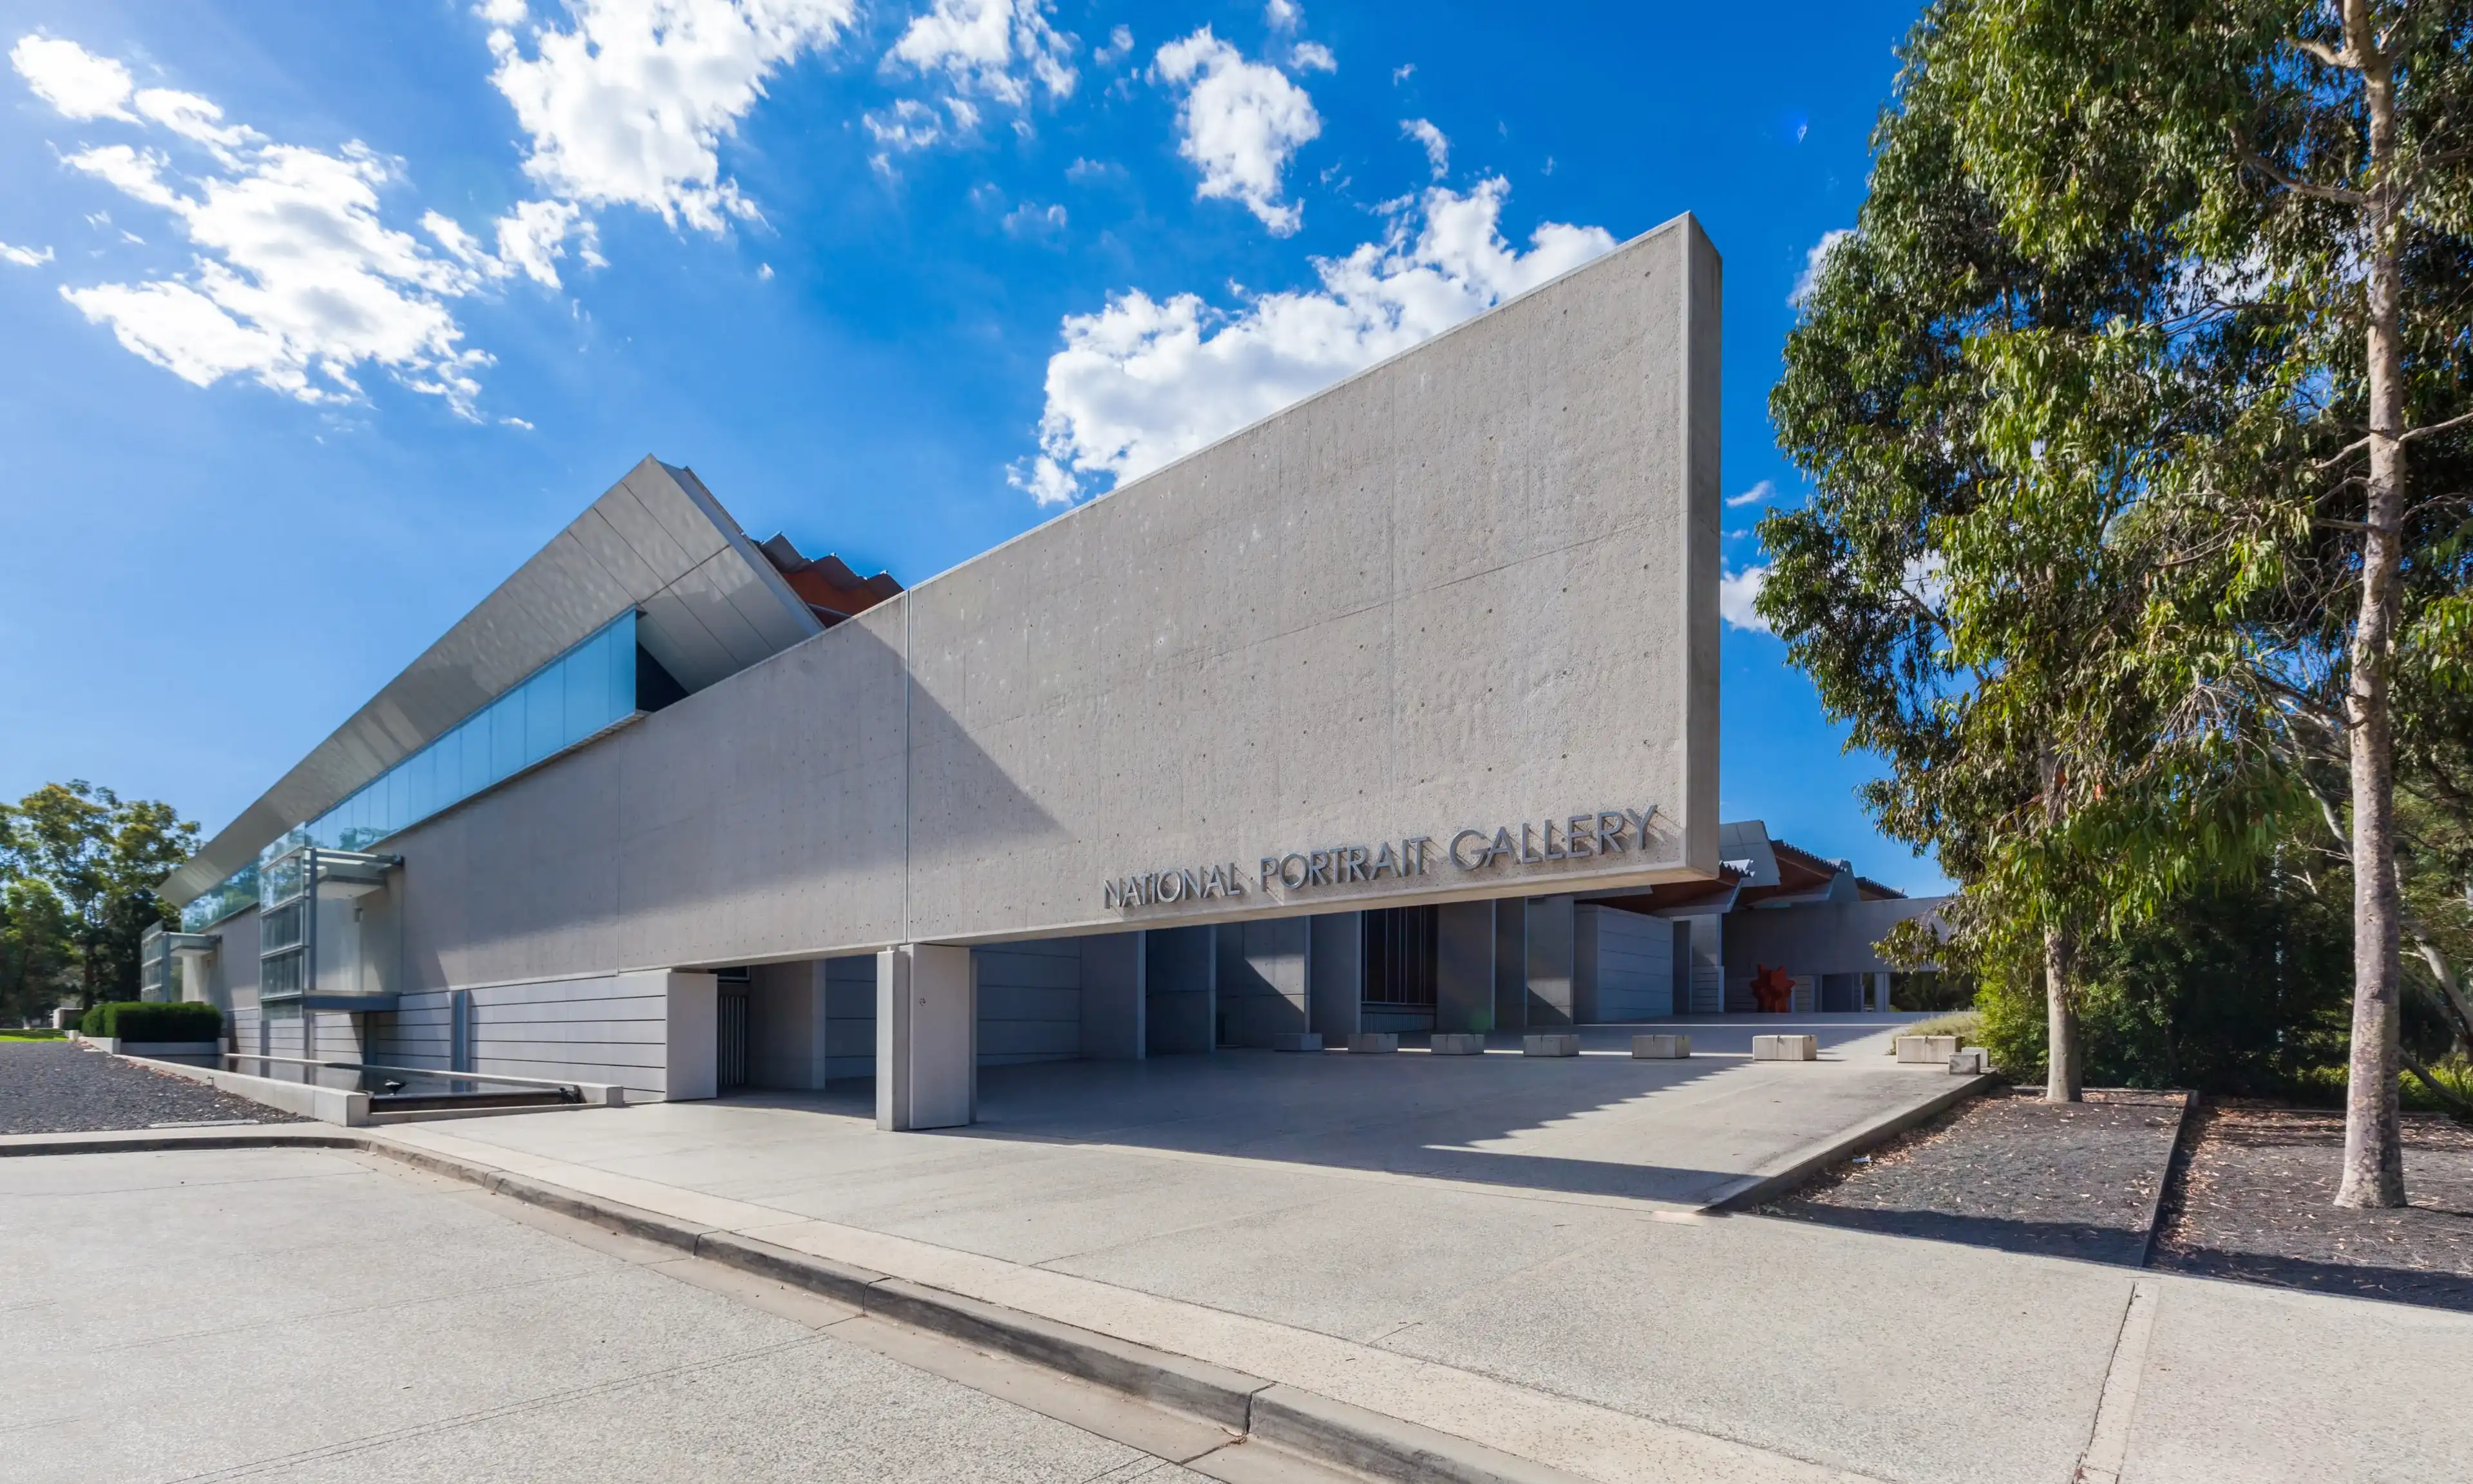 Canberra, Australia - March 12, 2018: National Portrait Gallery Entrance